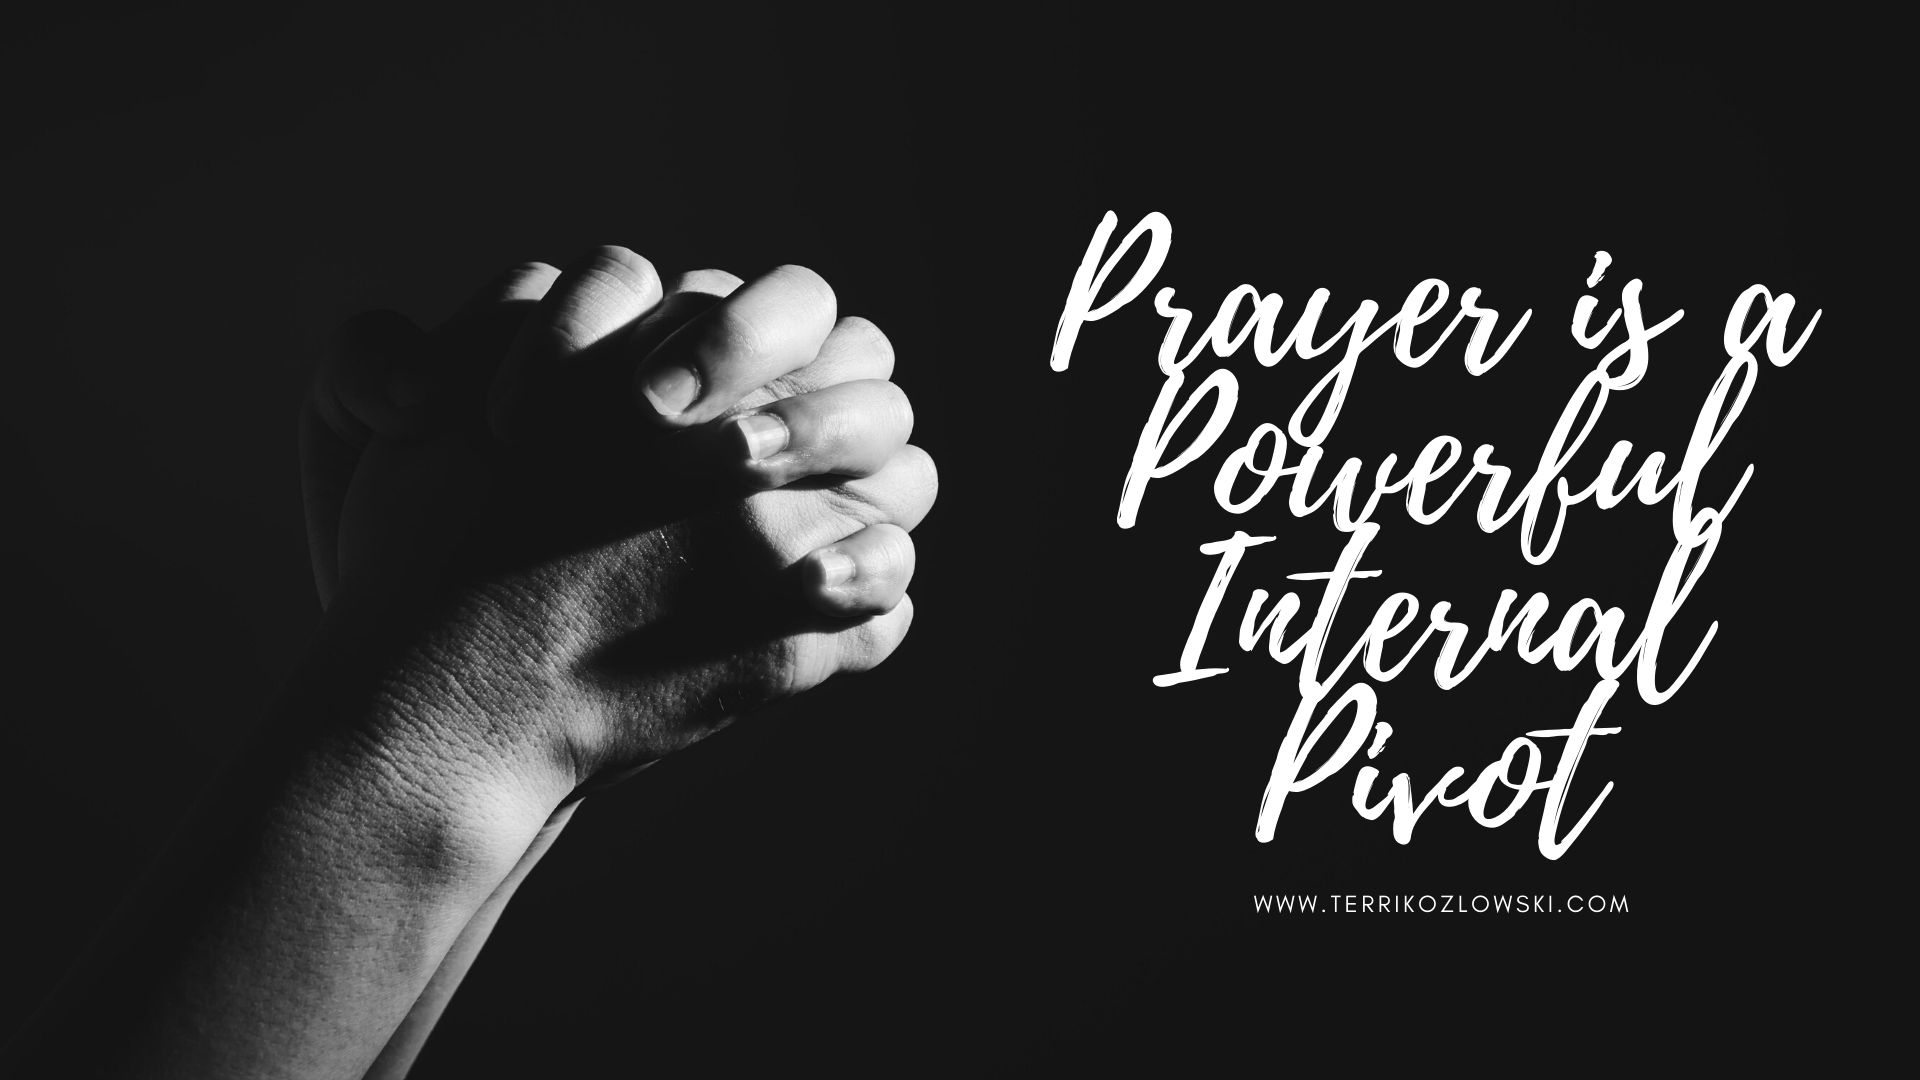 Pivot through Prayer